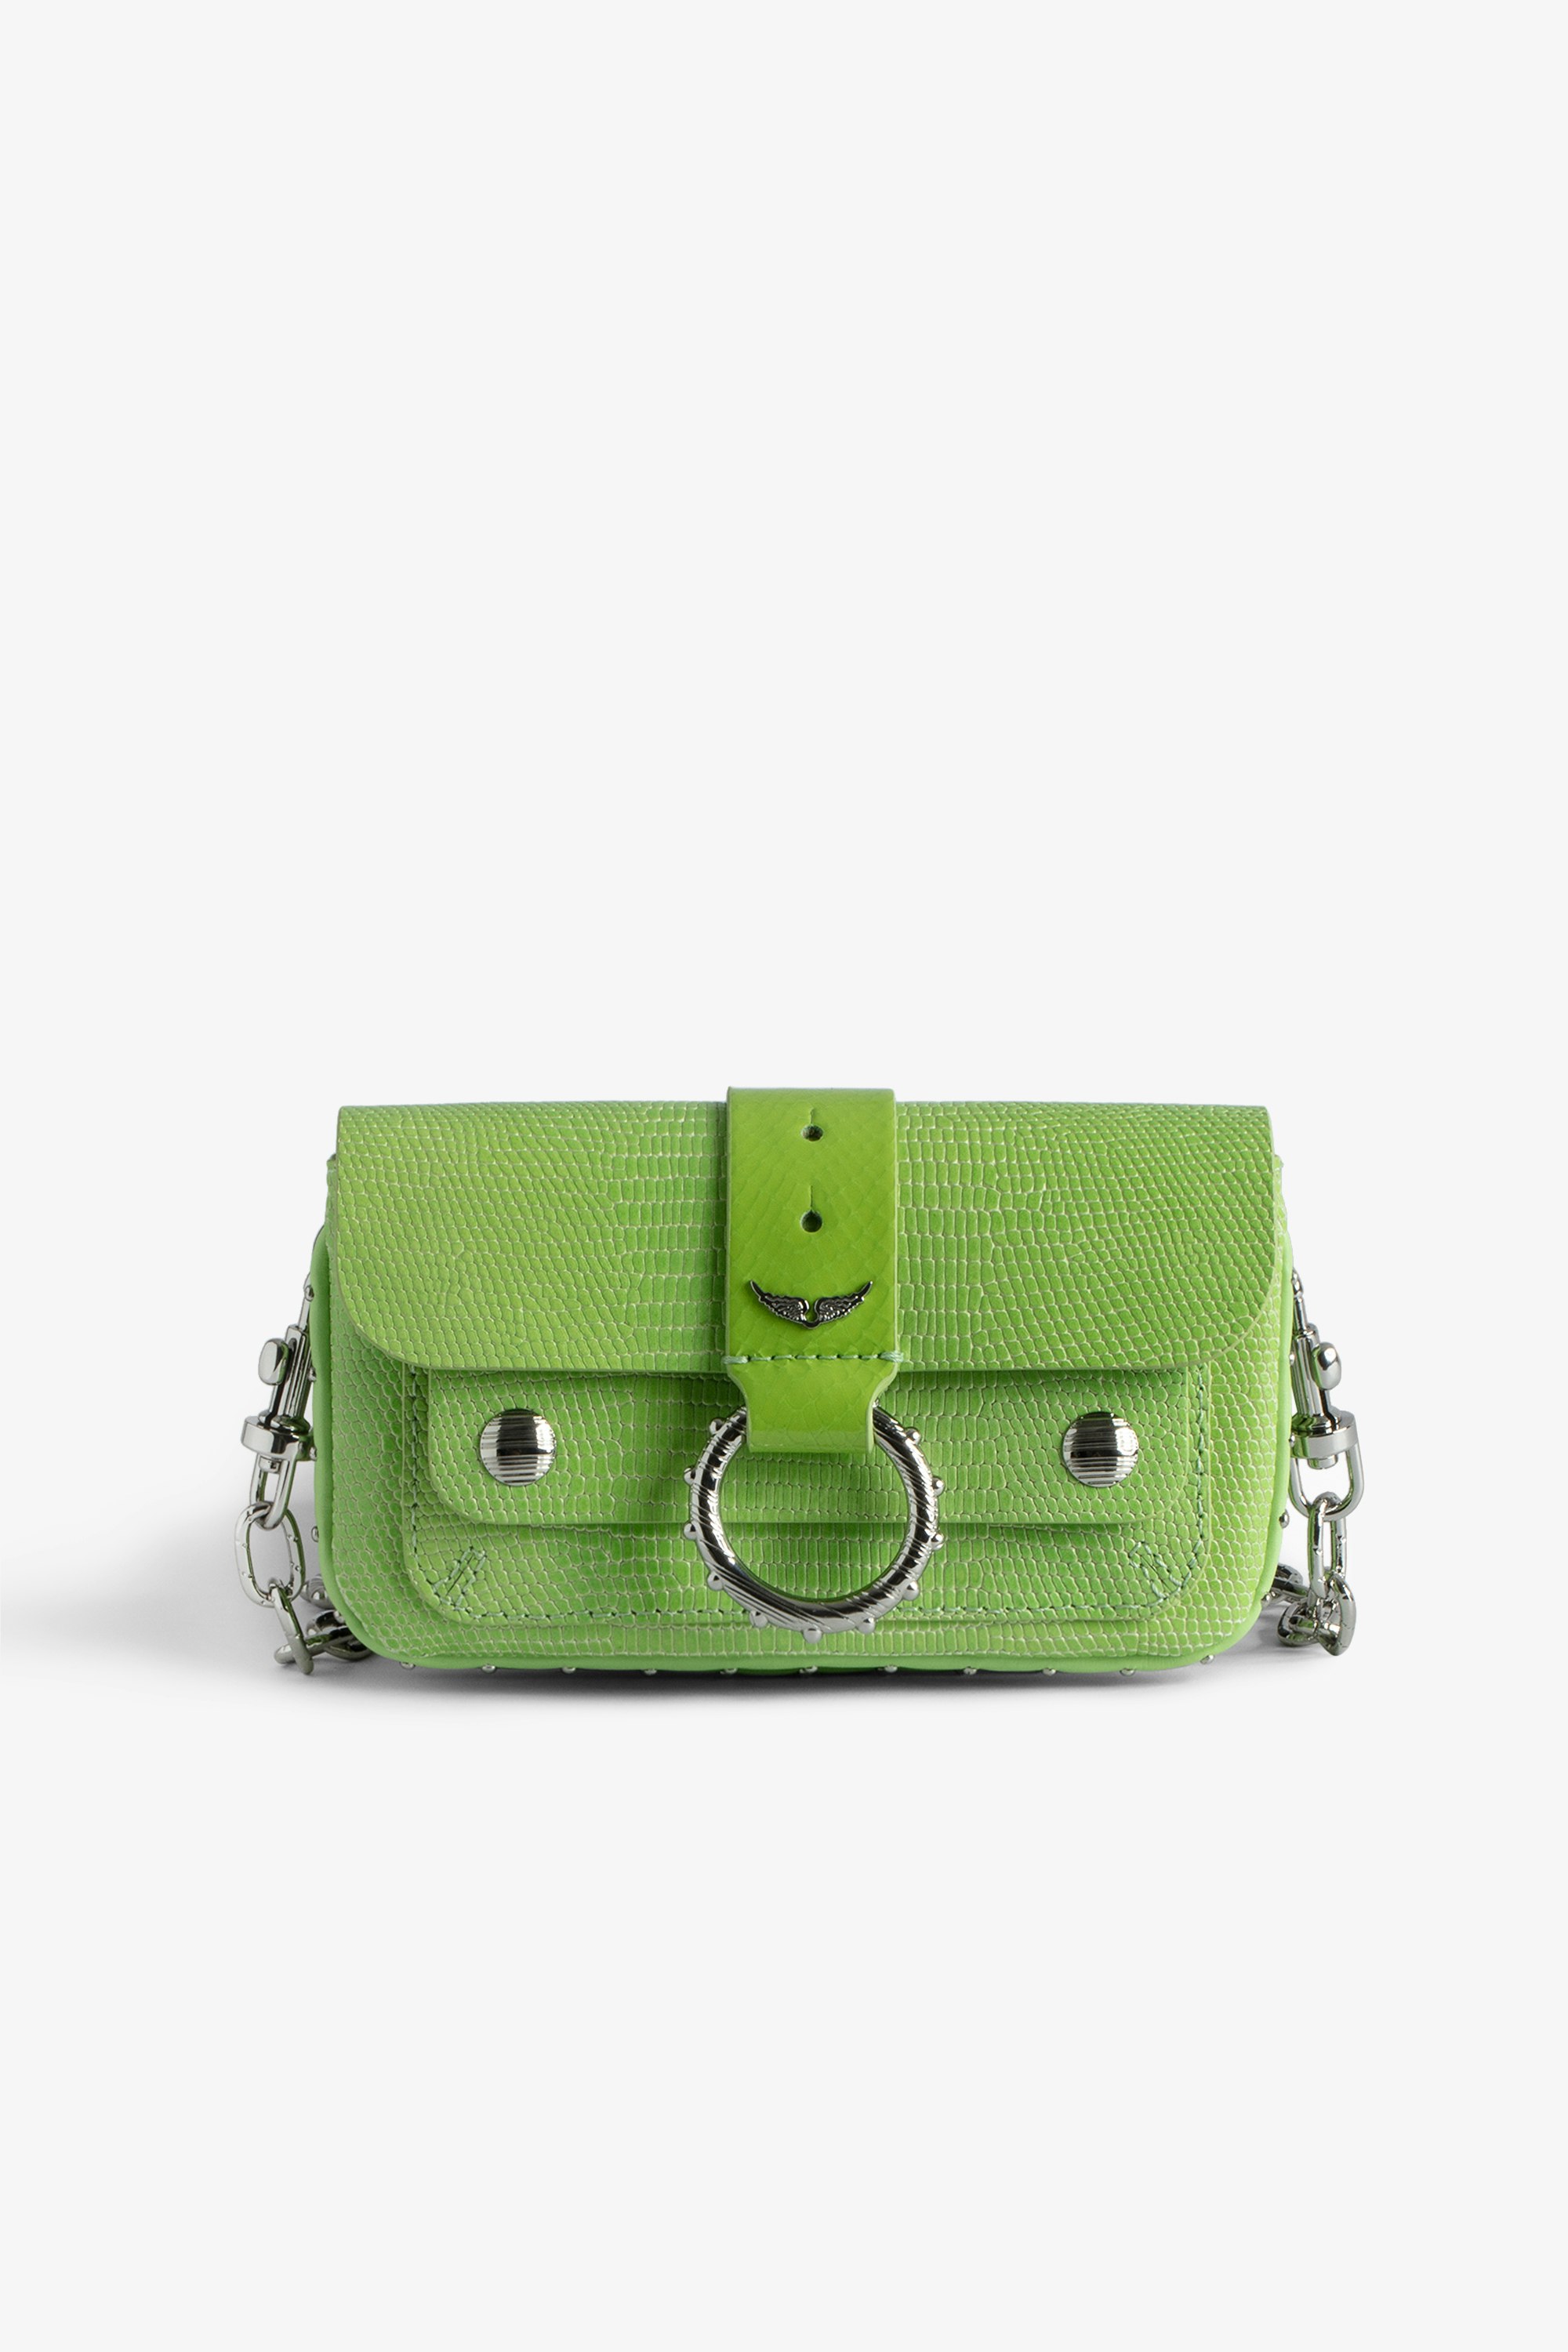 Sac Kate Wallet Glossy Wild Mini sac en cuir brillant vert effet iguane à chaîne en métal.